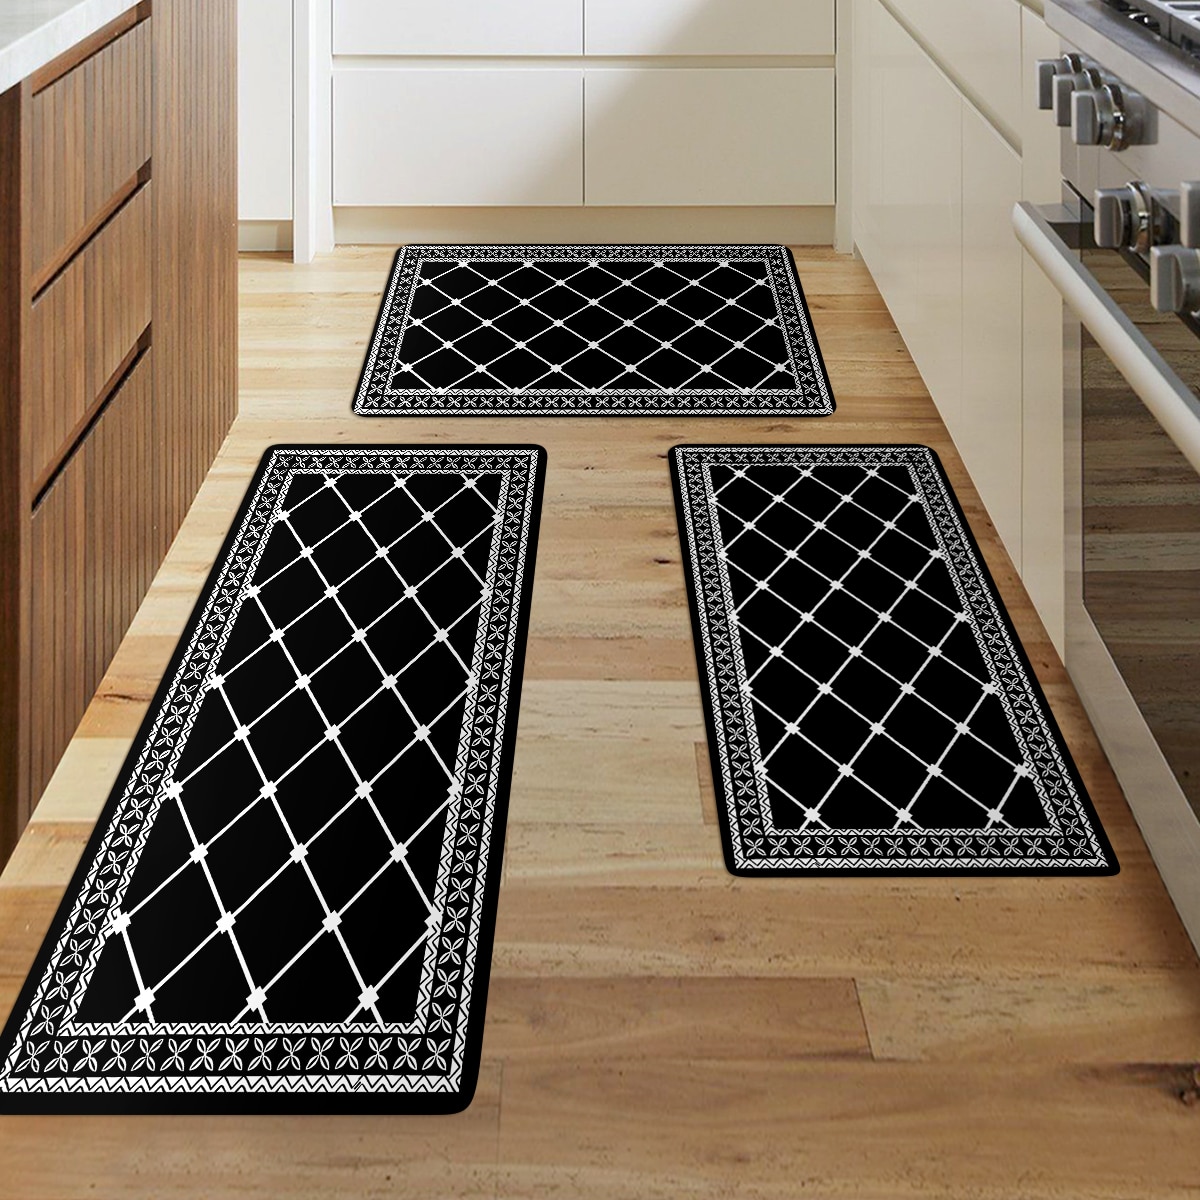 Kitchen Floor Mat Rug Washable Non-Slip Non-Skid Large Durable  Multi-Purpose NEW